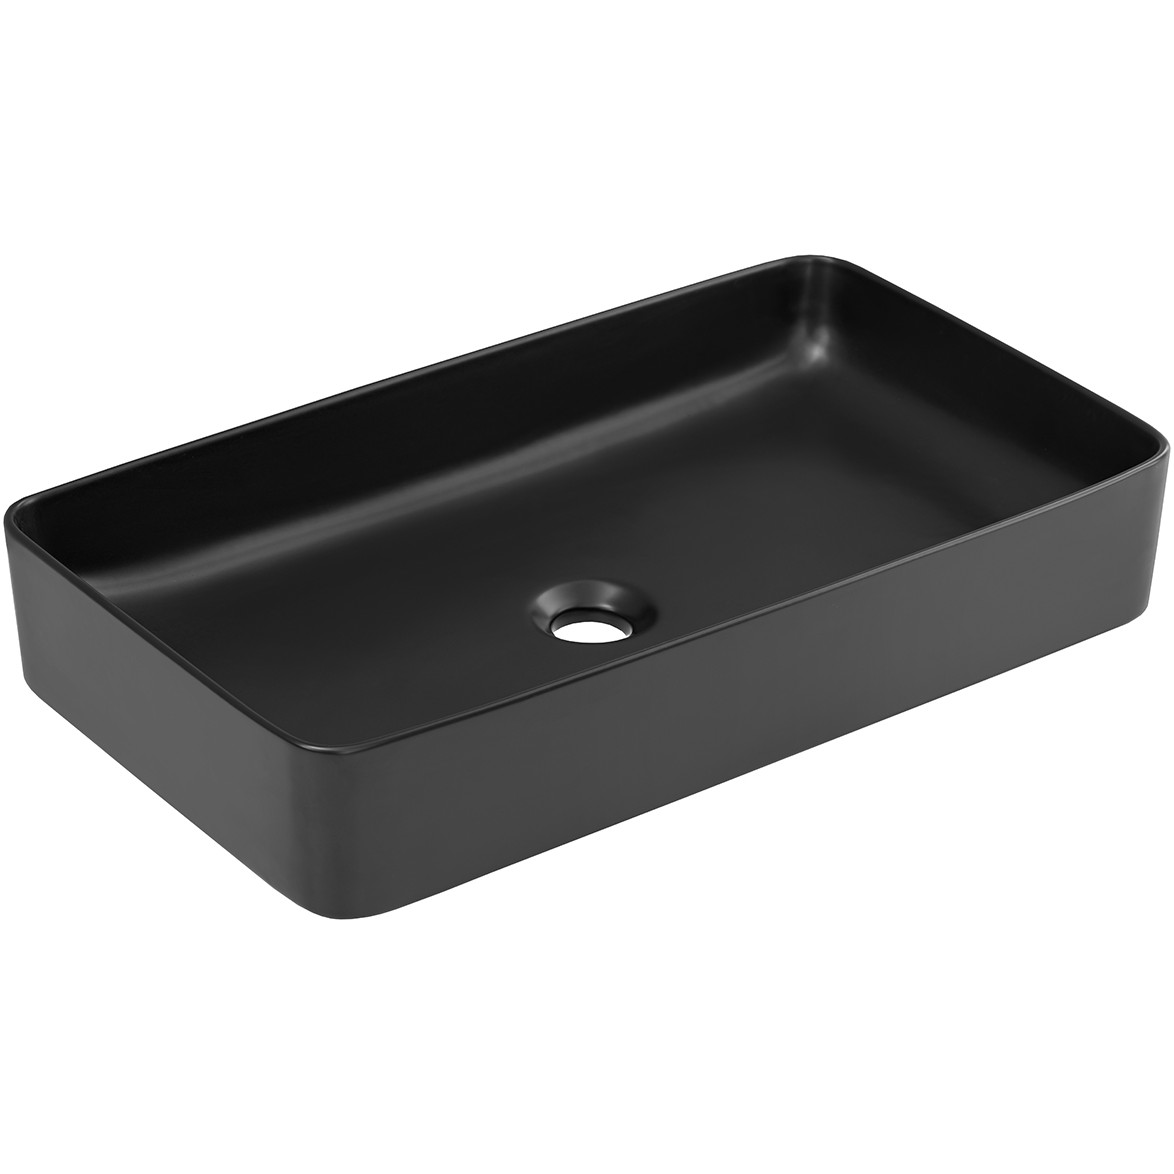 Countertop washbasin RICH 2 black